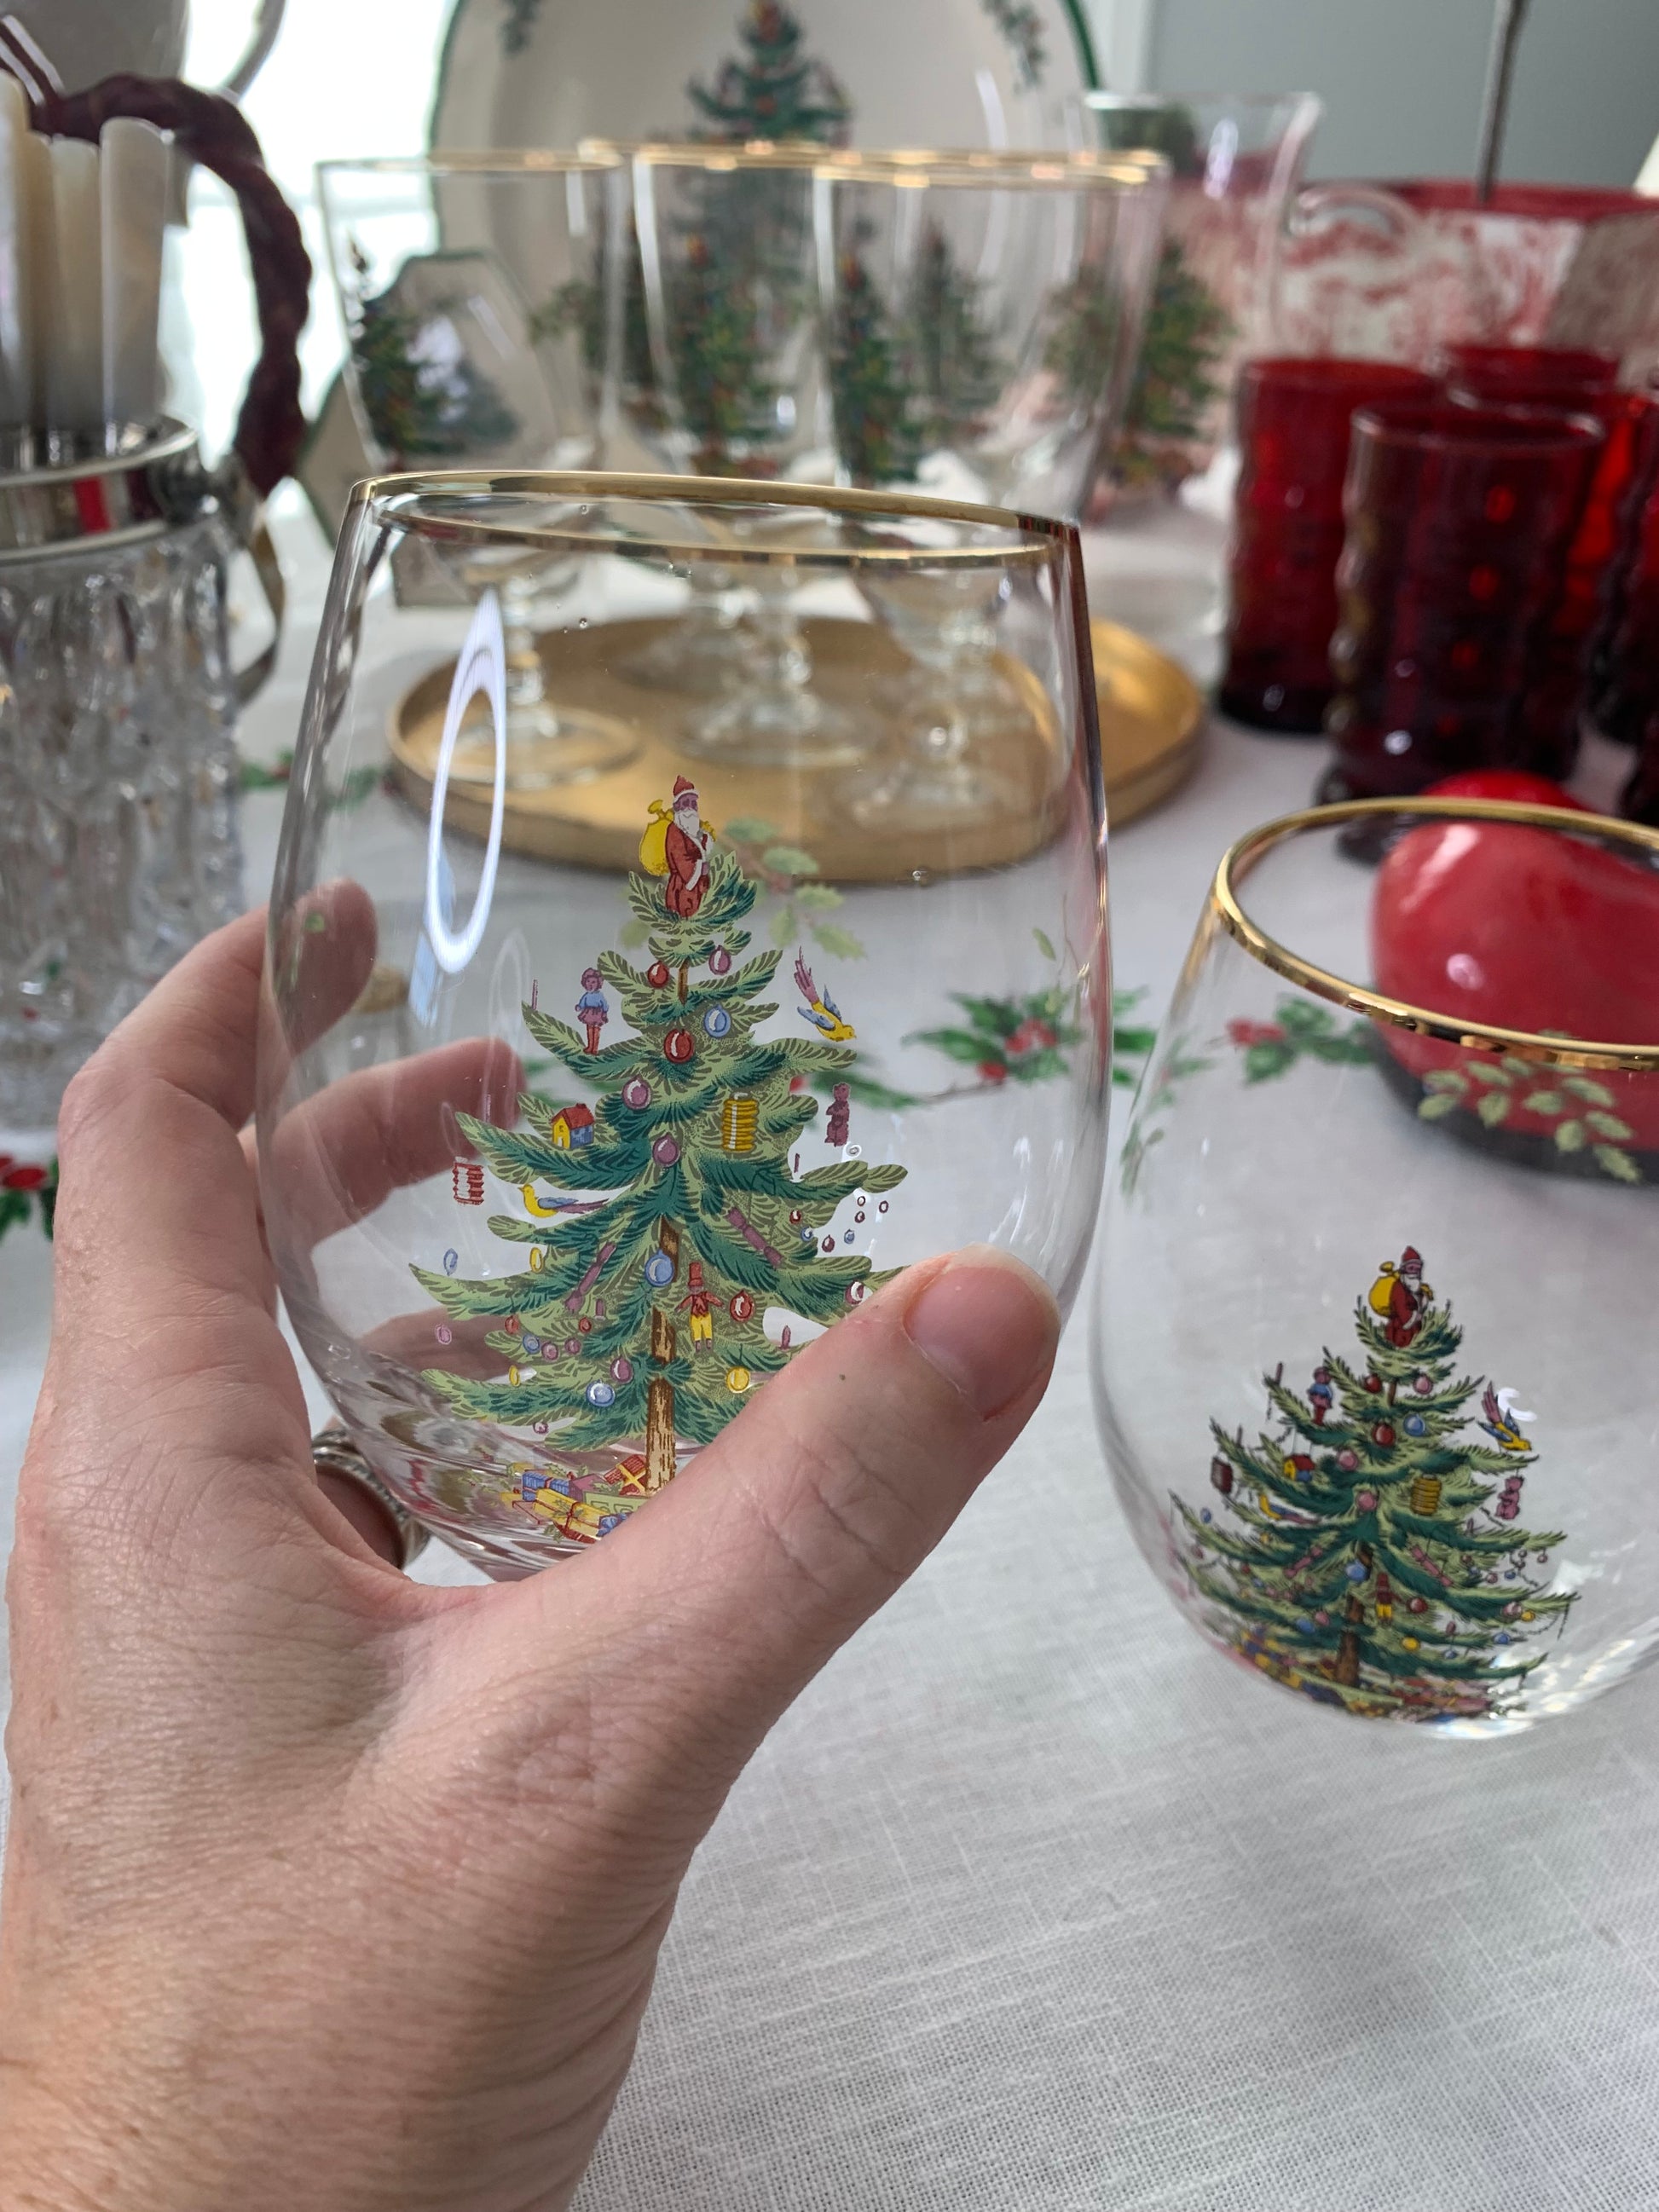 Spode Christmas Tree Stemless Wine Glasses Set of 4 19 Oz 